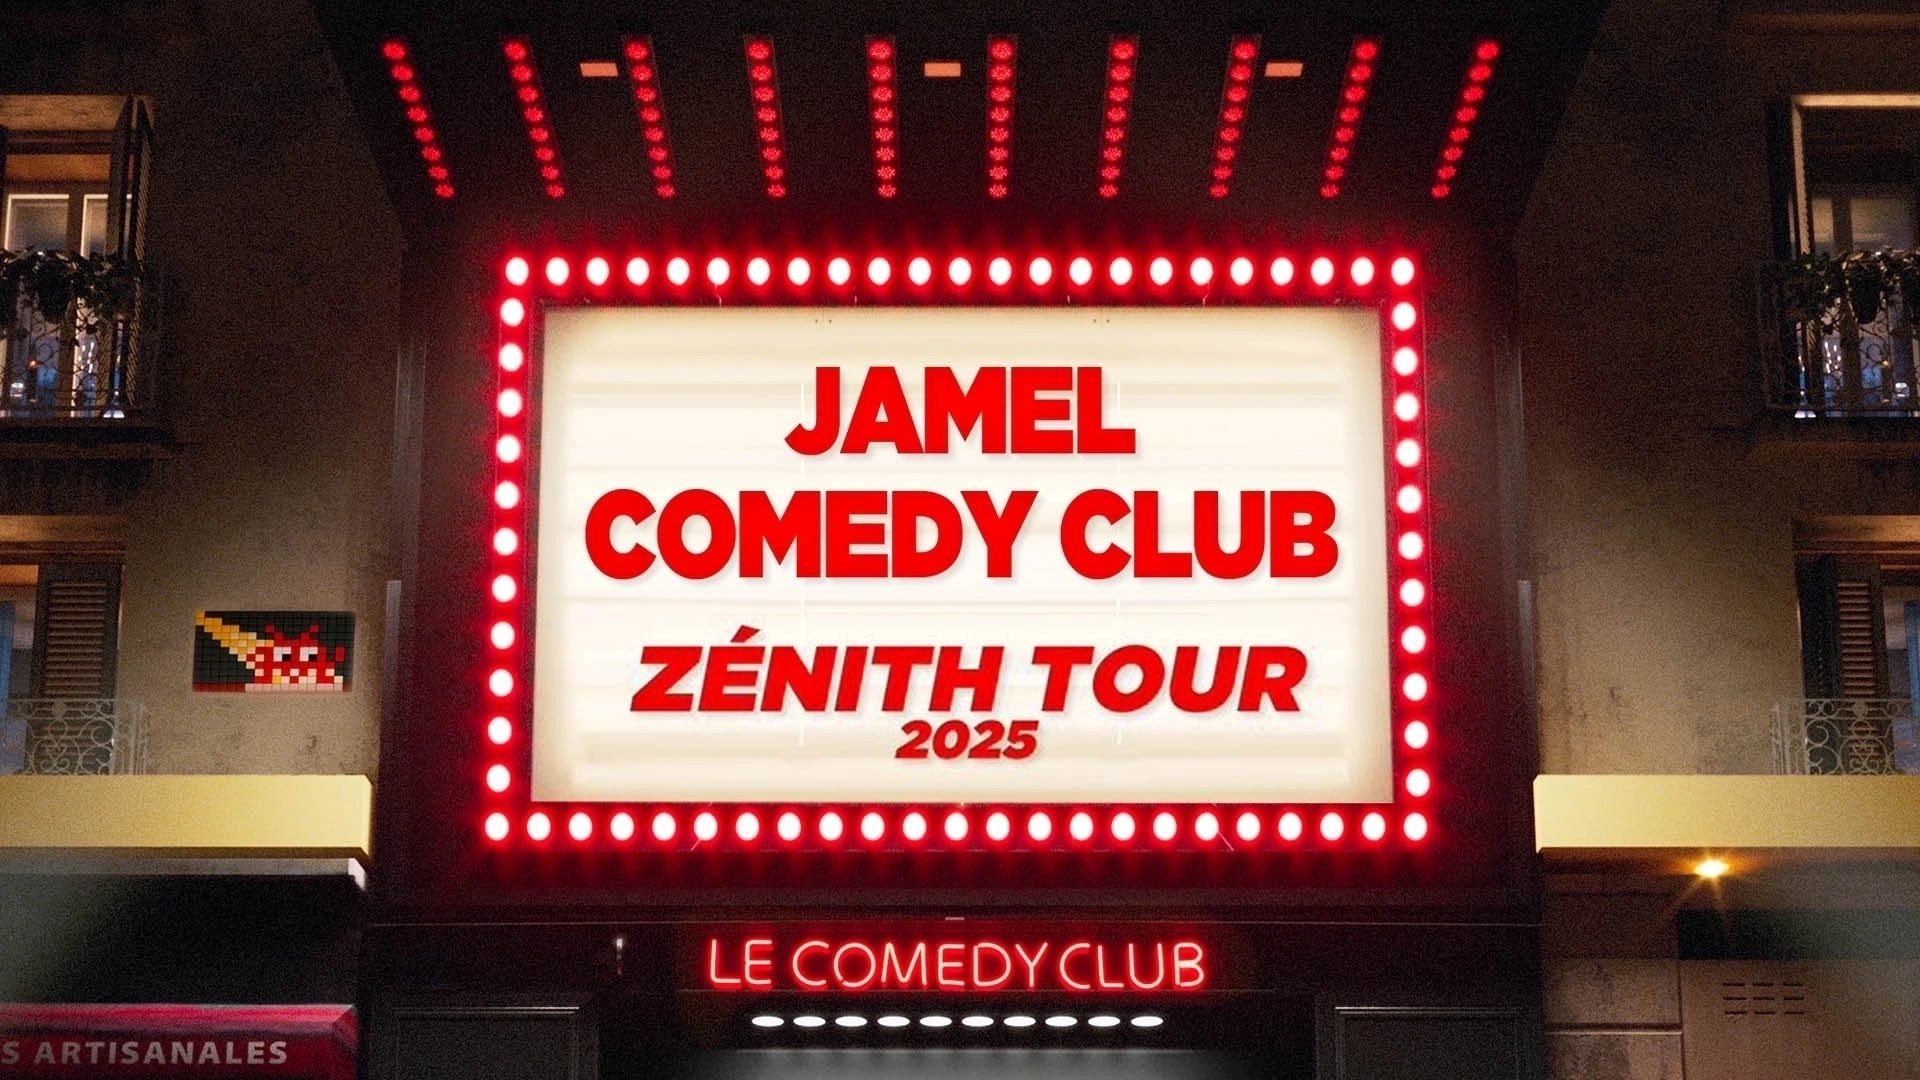 Jamel Comedy Club Zenith Tour 2025 en Forest National Tickets